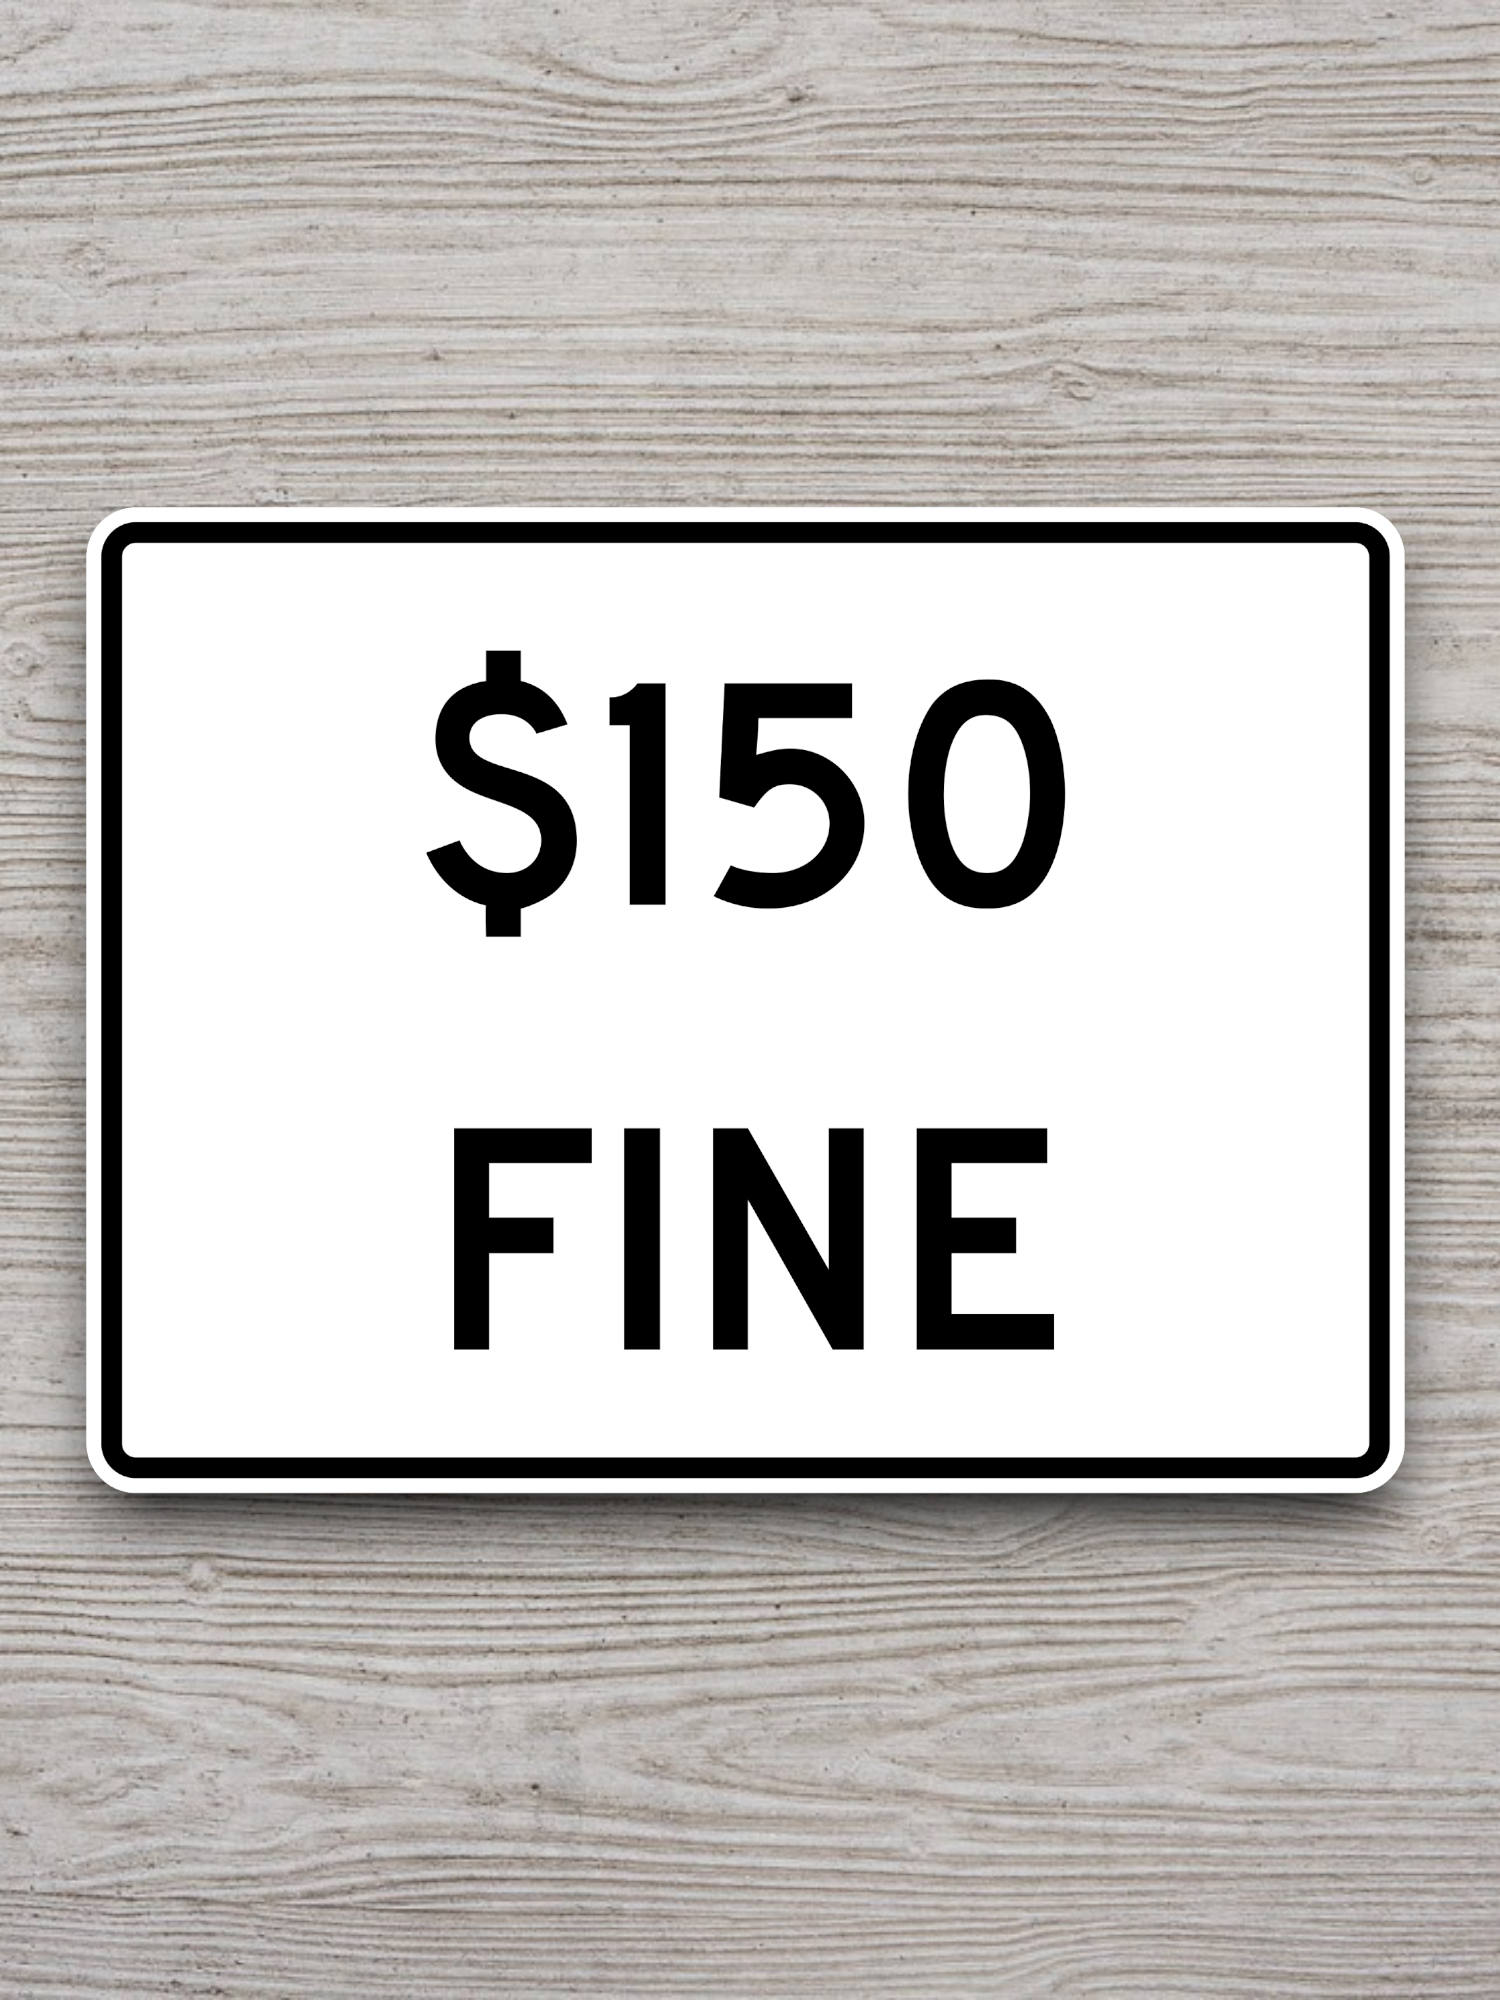 [title]50 Fine United States Road Sign Sticker